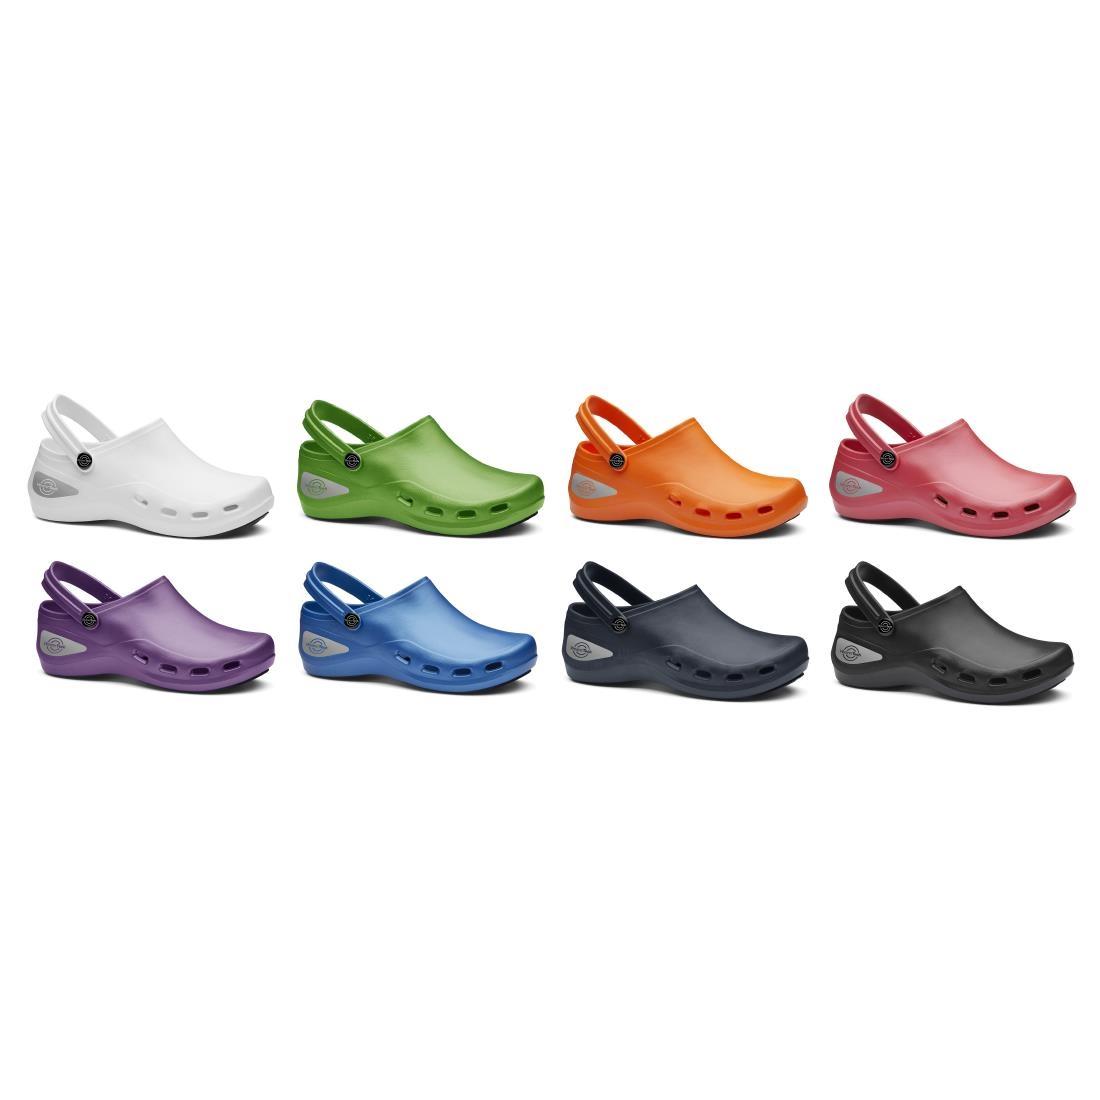 WearerTech Unisex Invigorate Black Safety Shoe Size 3 - BB195-36  - 7